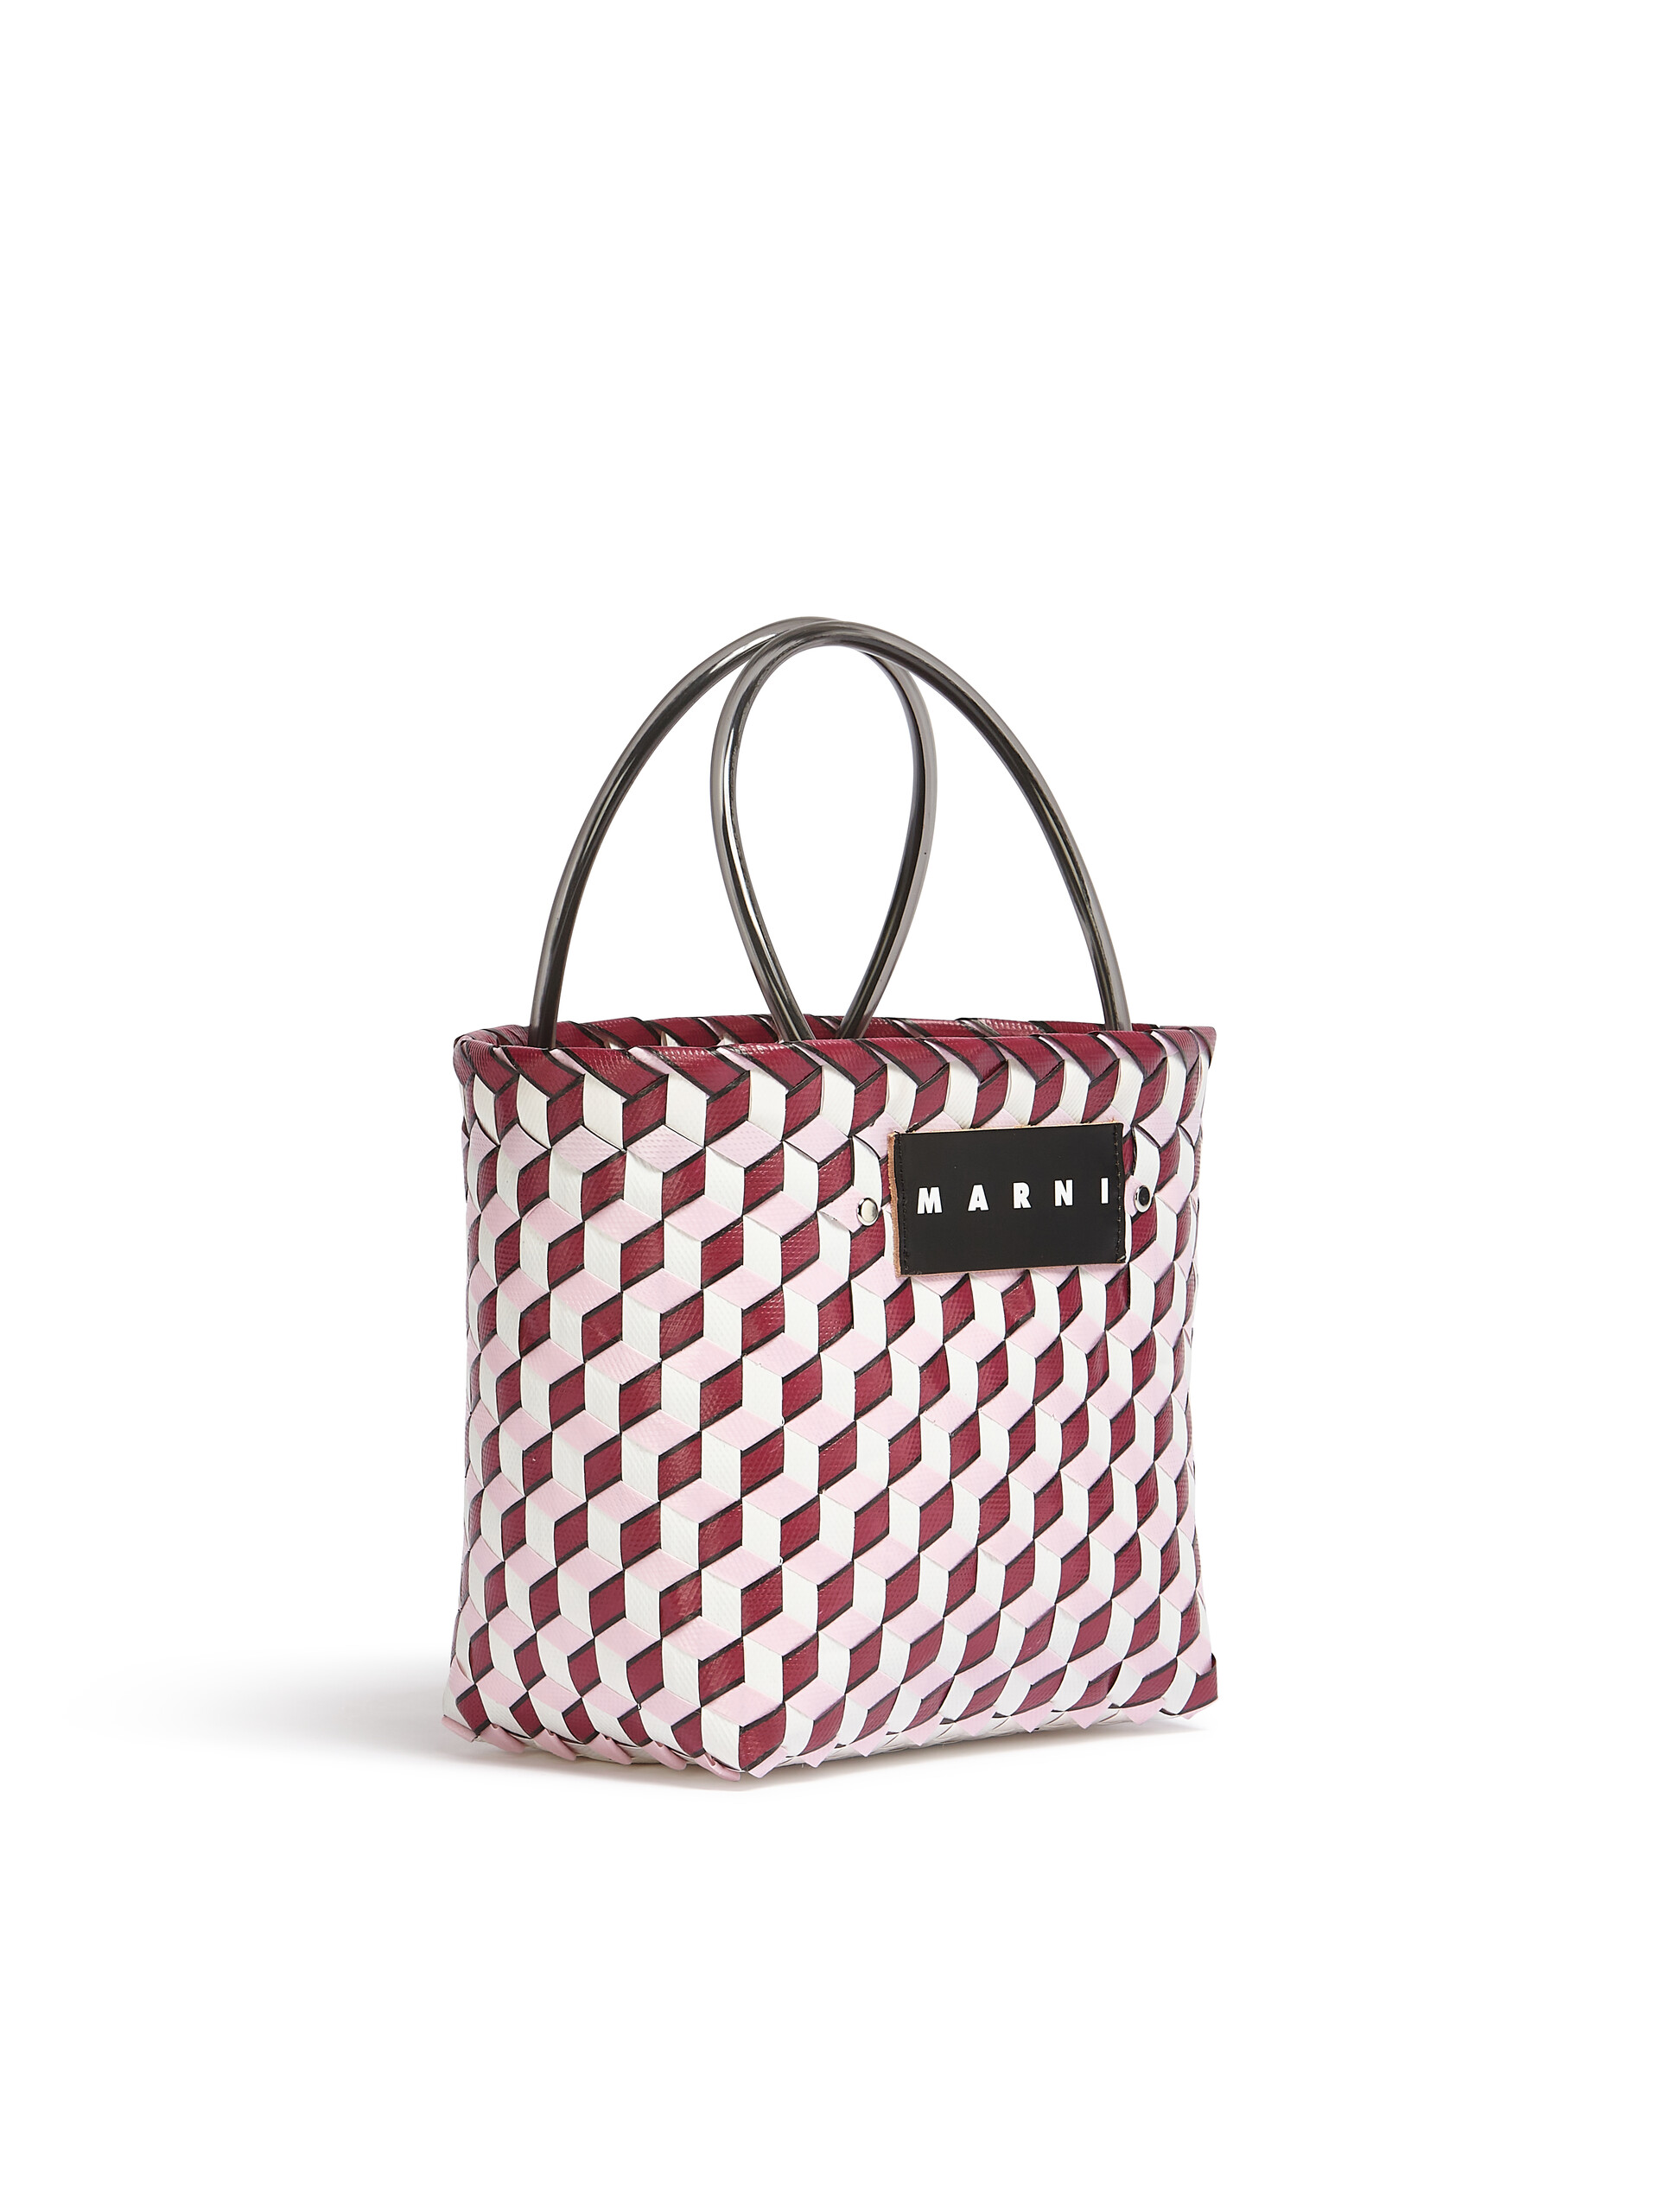 MARNI MARKET bag in burgundy cube woven material - Bags - Image 2